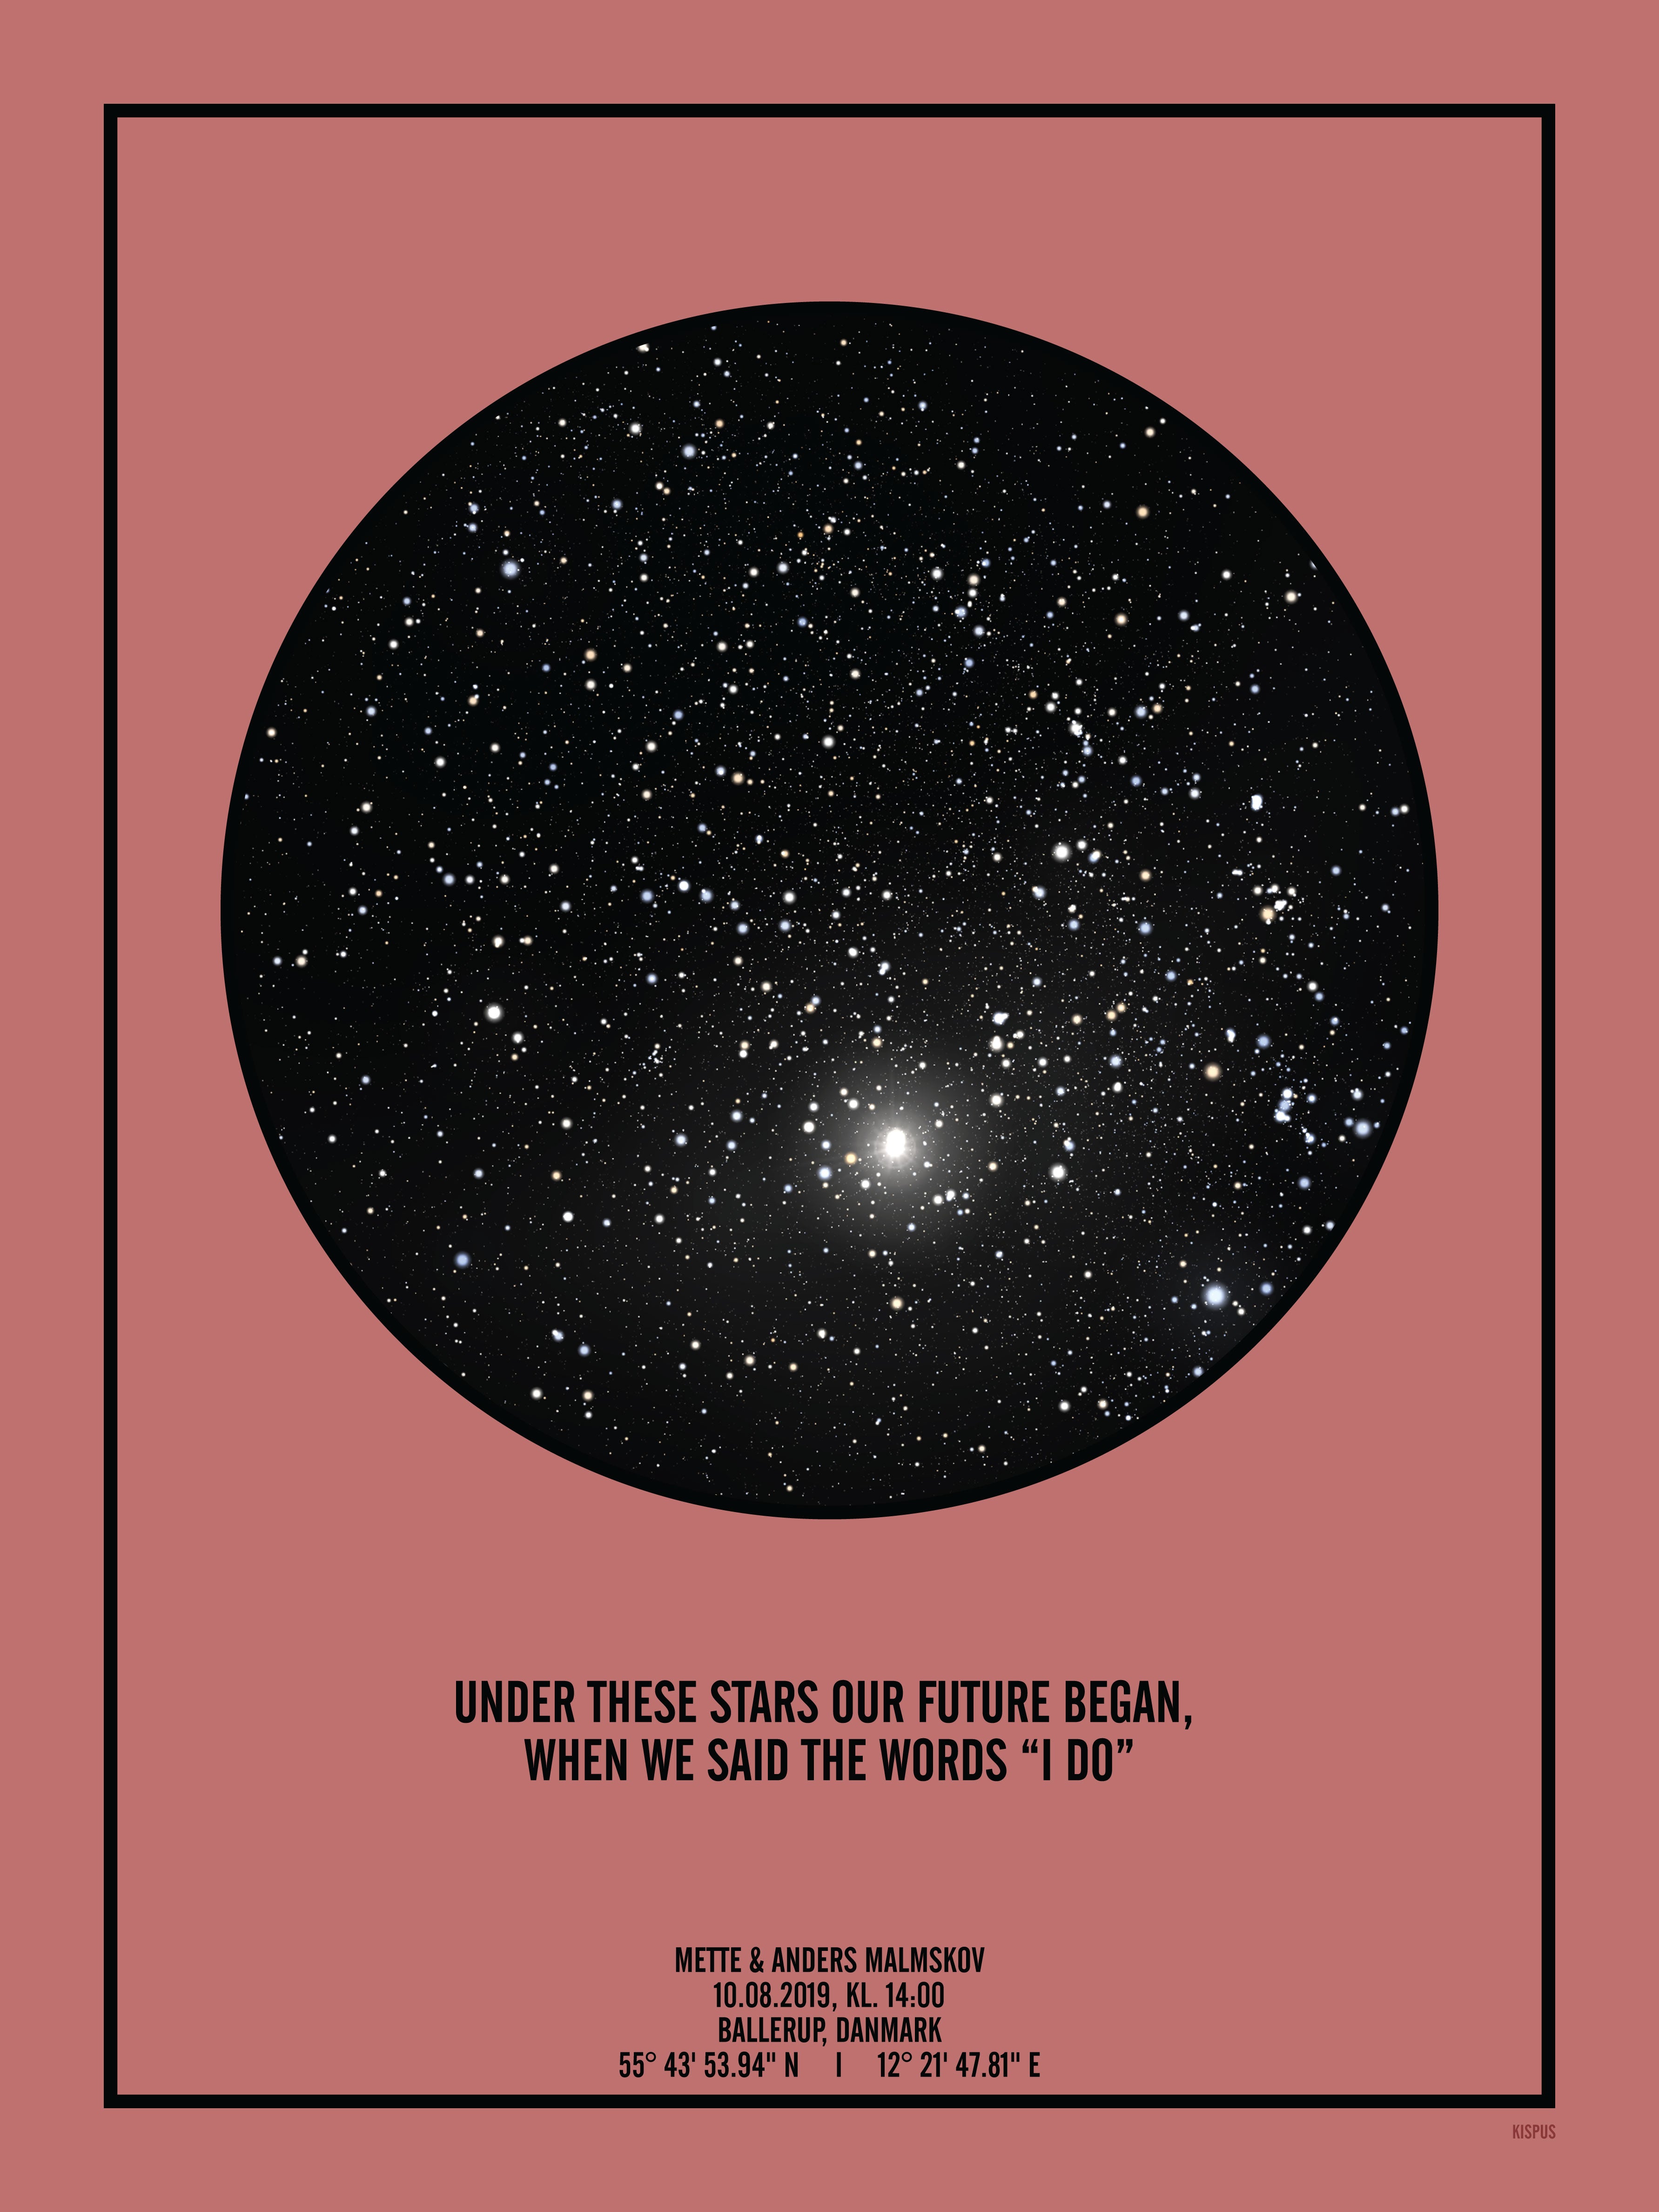 Se PERSONLIG STJERNEHIMMEL PLAKAT (BLUSH) - 30x40 / Sort tekst og sort stjernehimmel / Klar stjernehimmel hos KISPUS